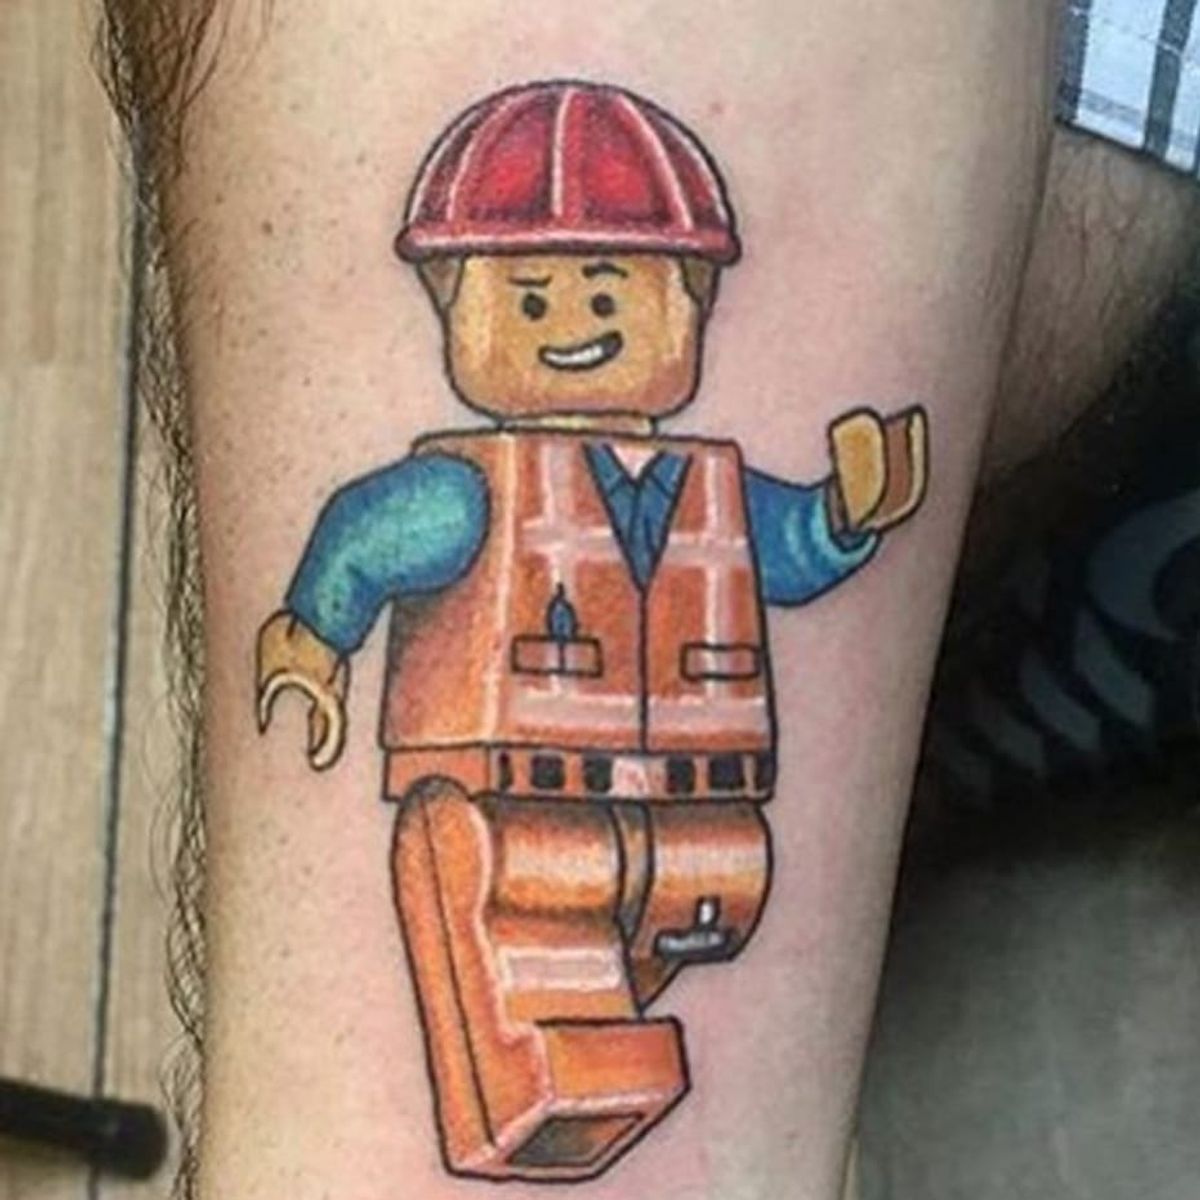 Tattoo uploaded by Joe • Pirate. (via IG - amehling0311) #LegoTattoo #Lego #Legos  #Pirate • Tattoodo